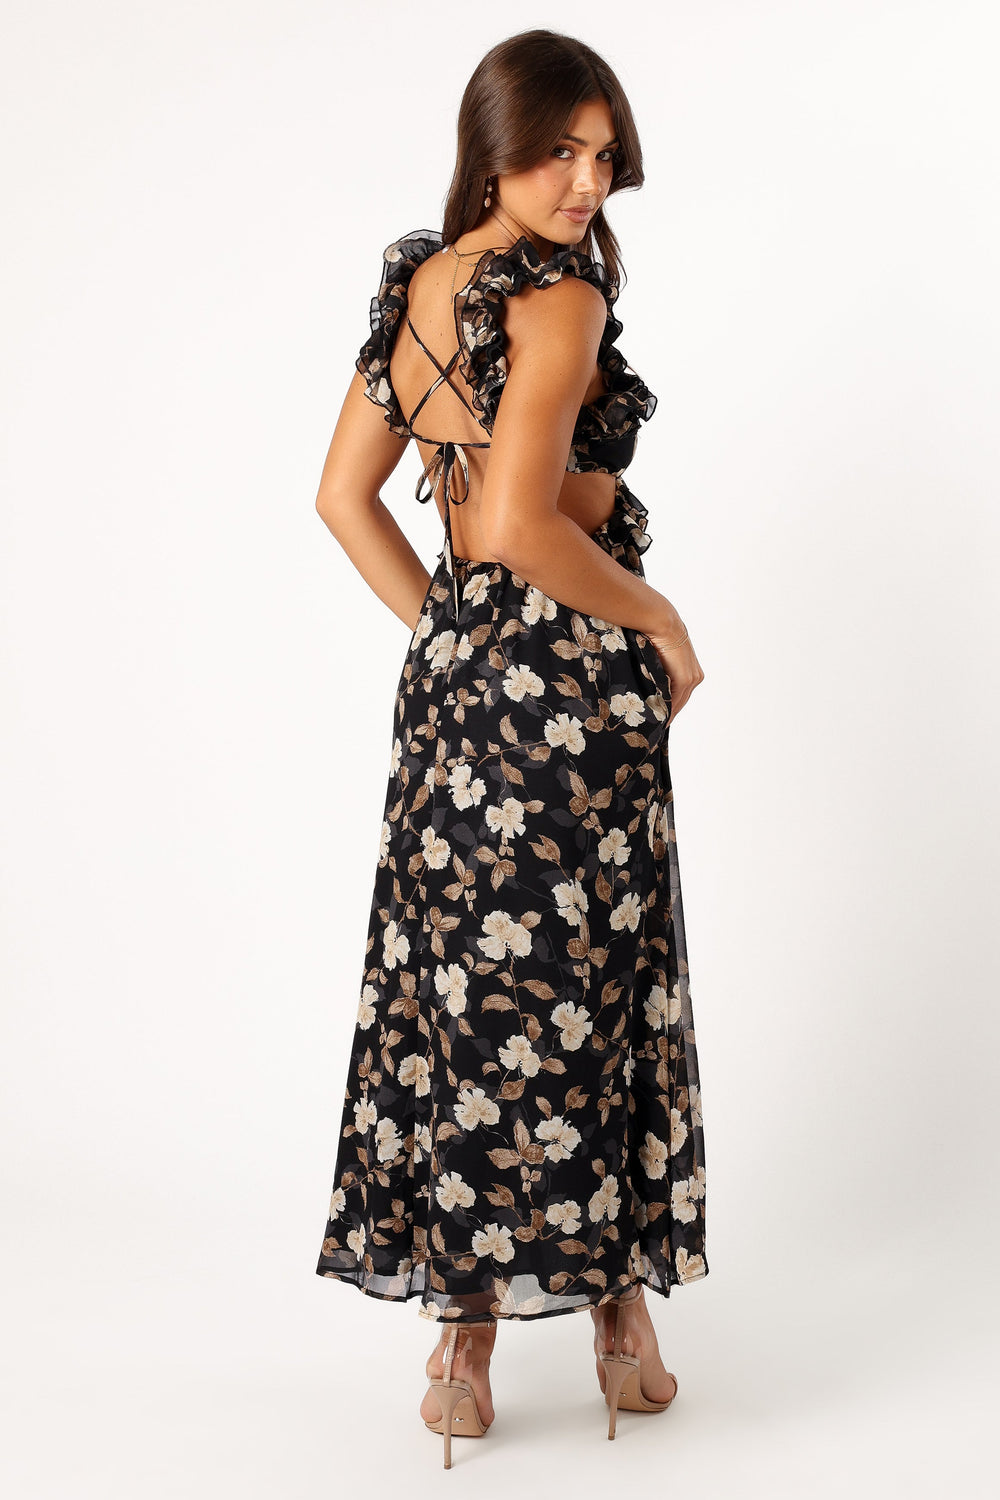 DRESSES @Lucah Frill Shoulder Maxi Dress - Black Floral (Hold for Modern Romance)